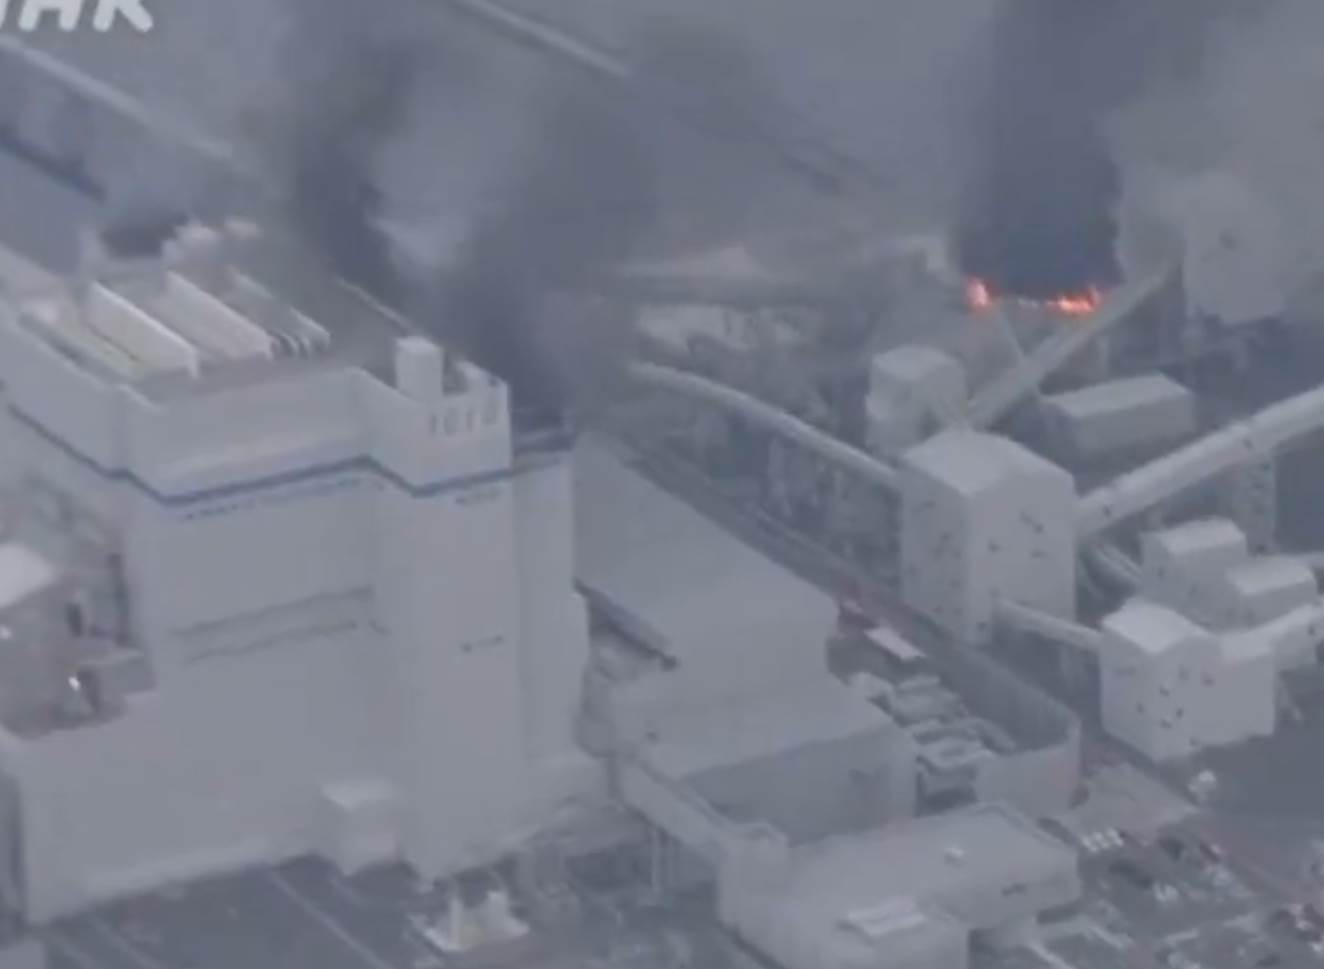  Eksplozija u termoelektrani u Japanu 